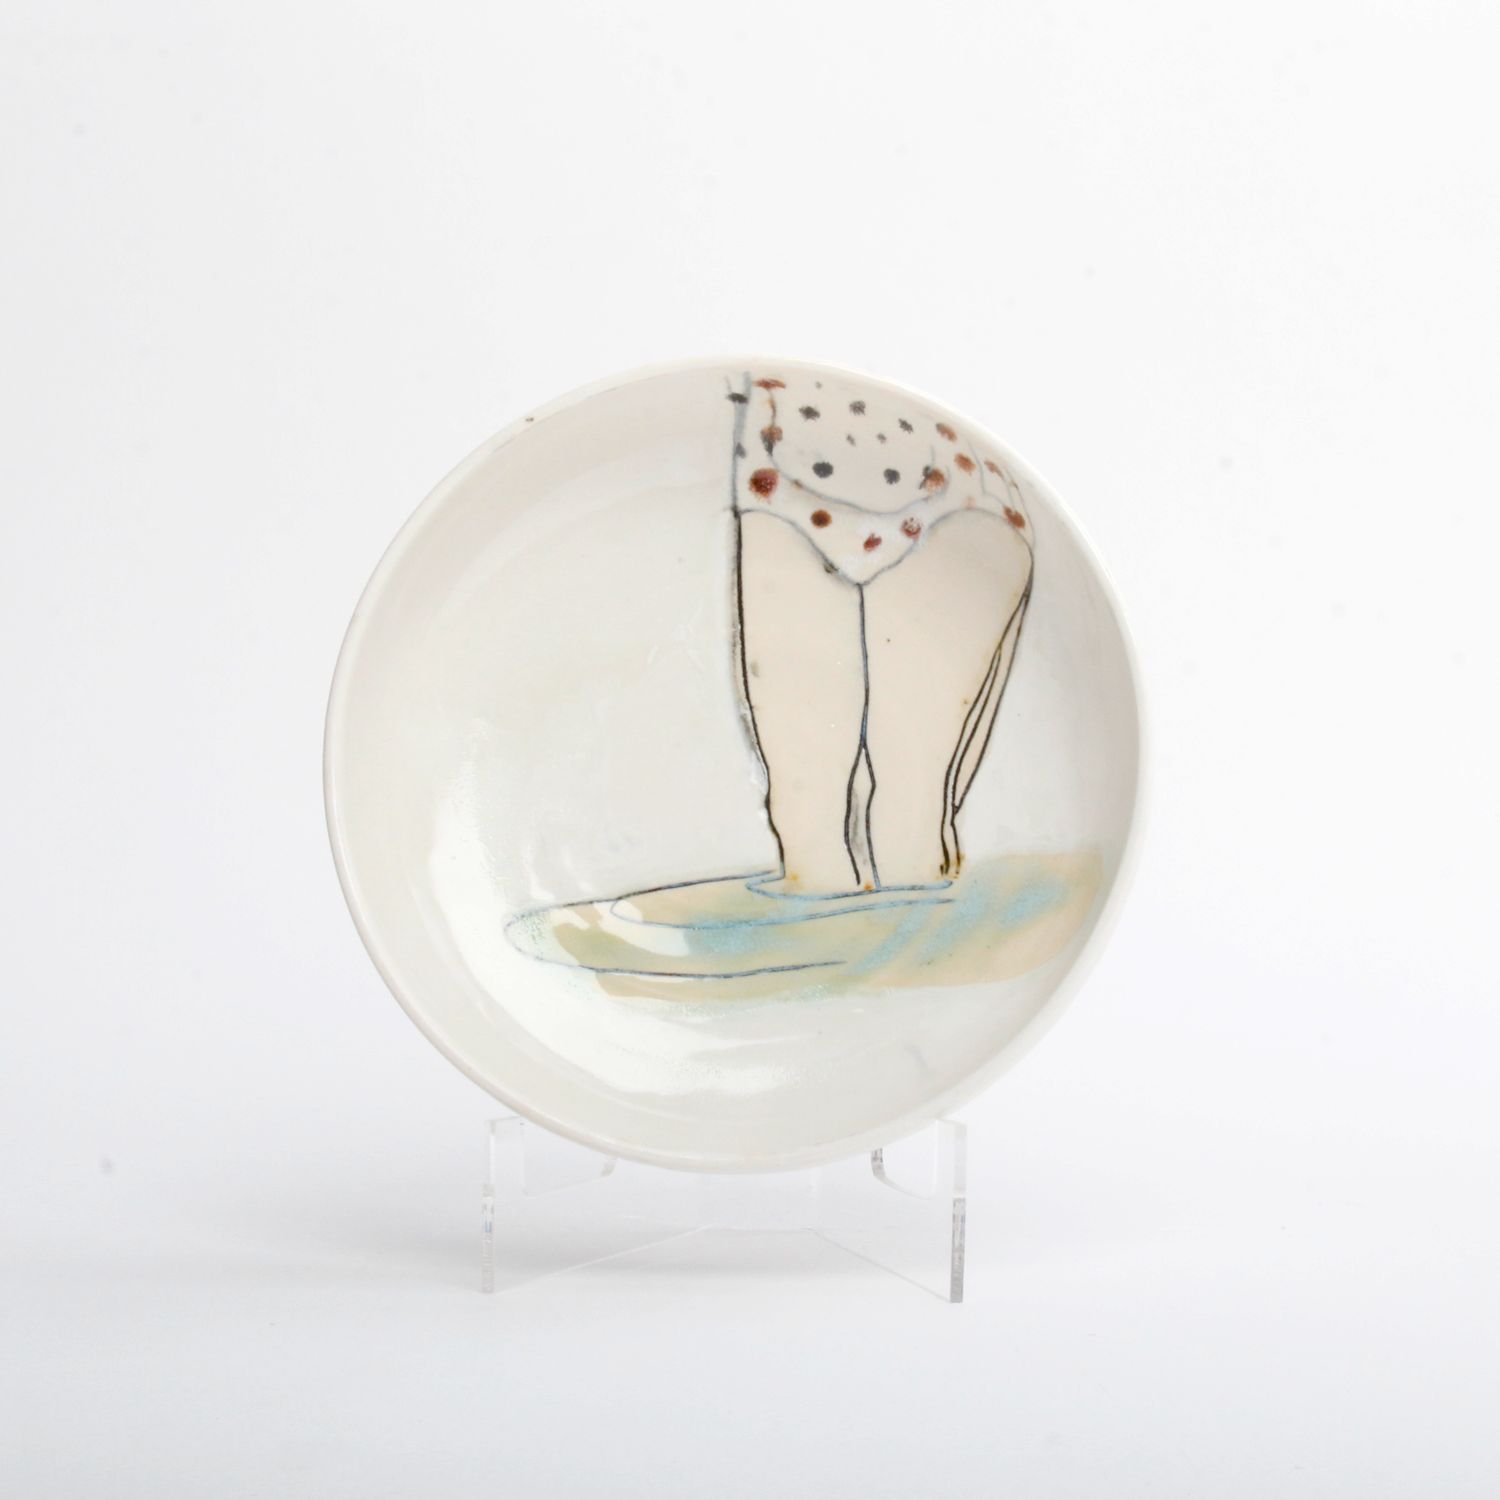 Lindsay Gravelle: Swimmer bowls Product Image 4 of 5